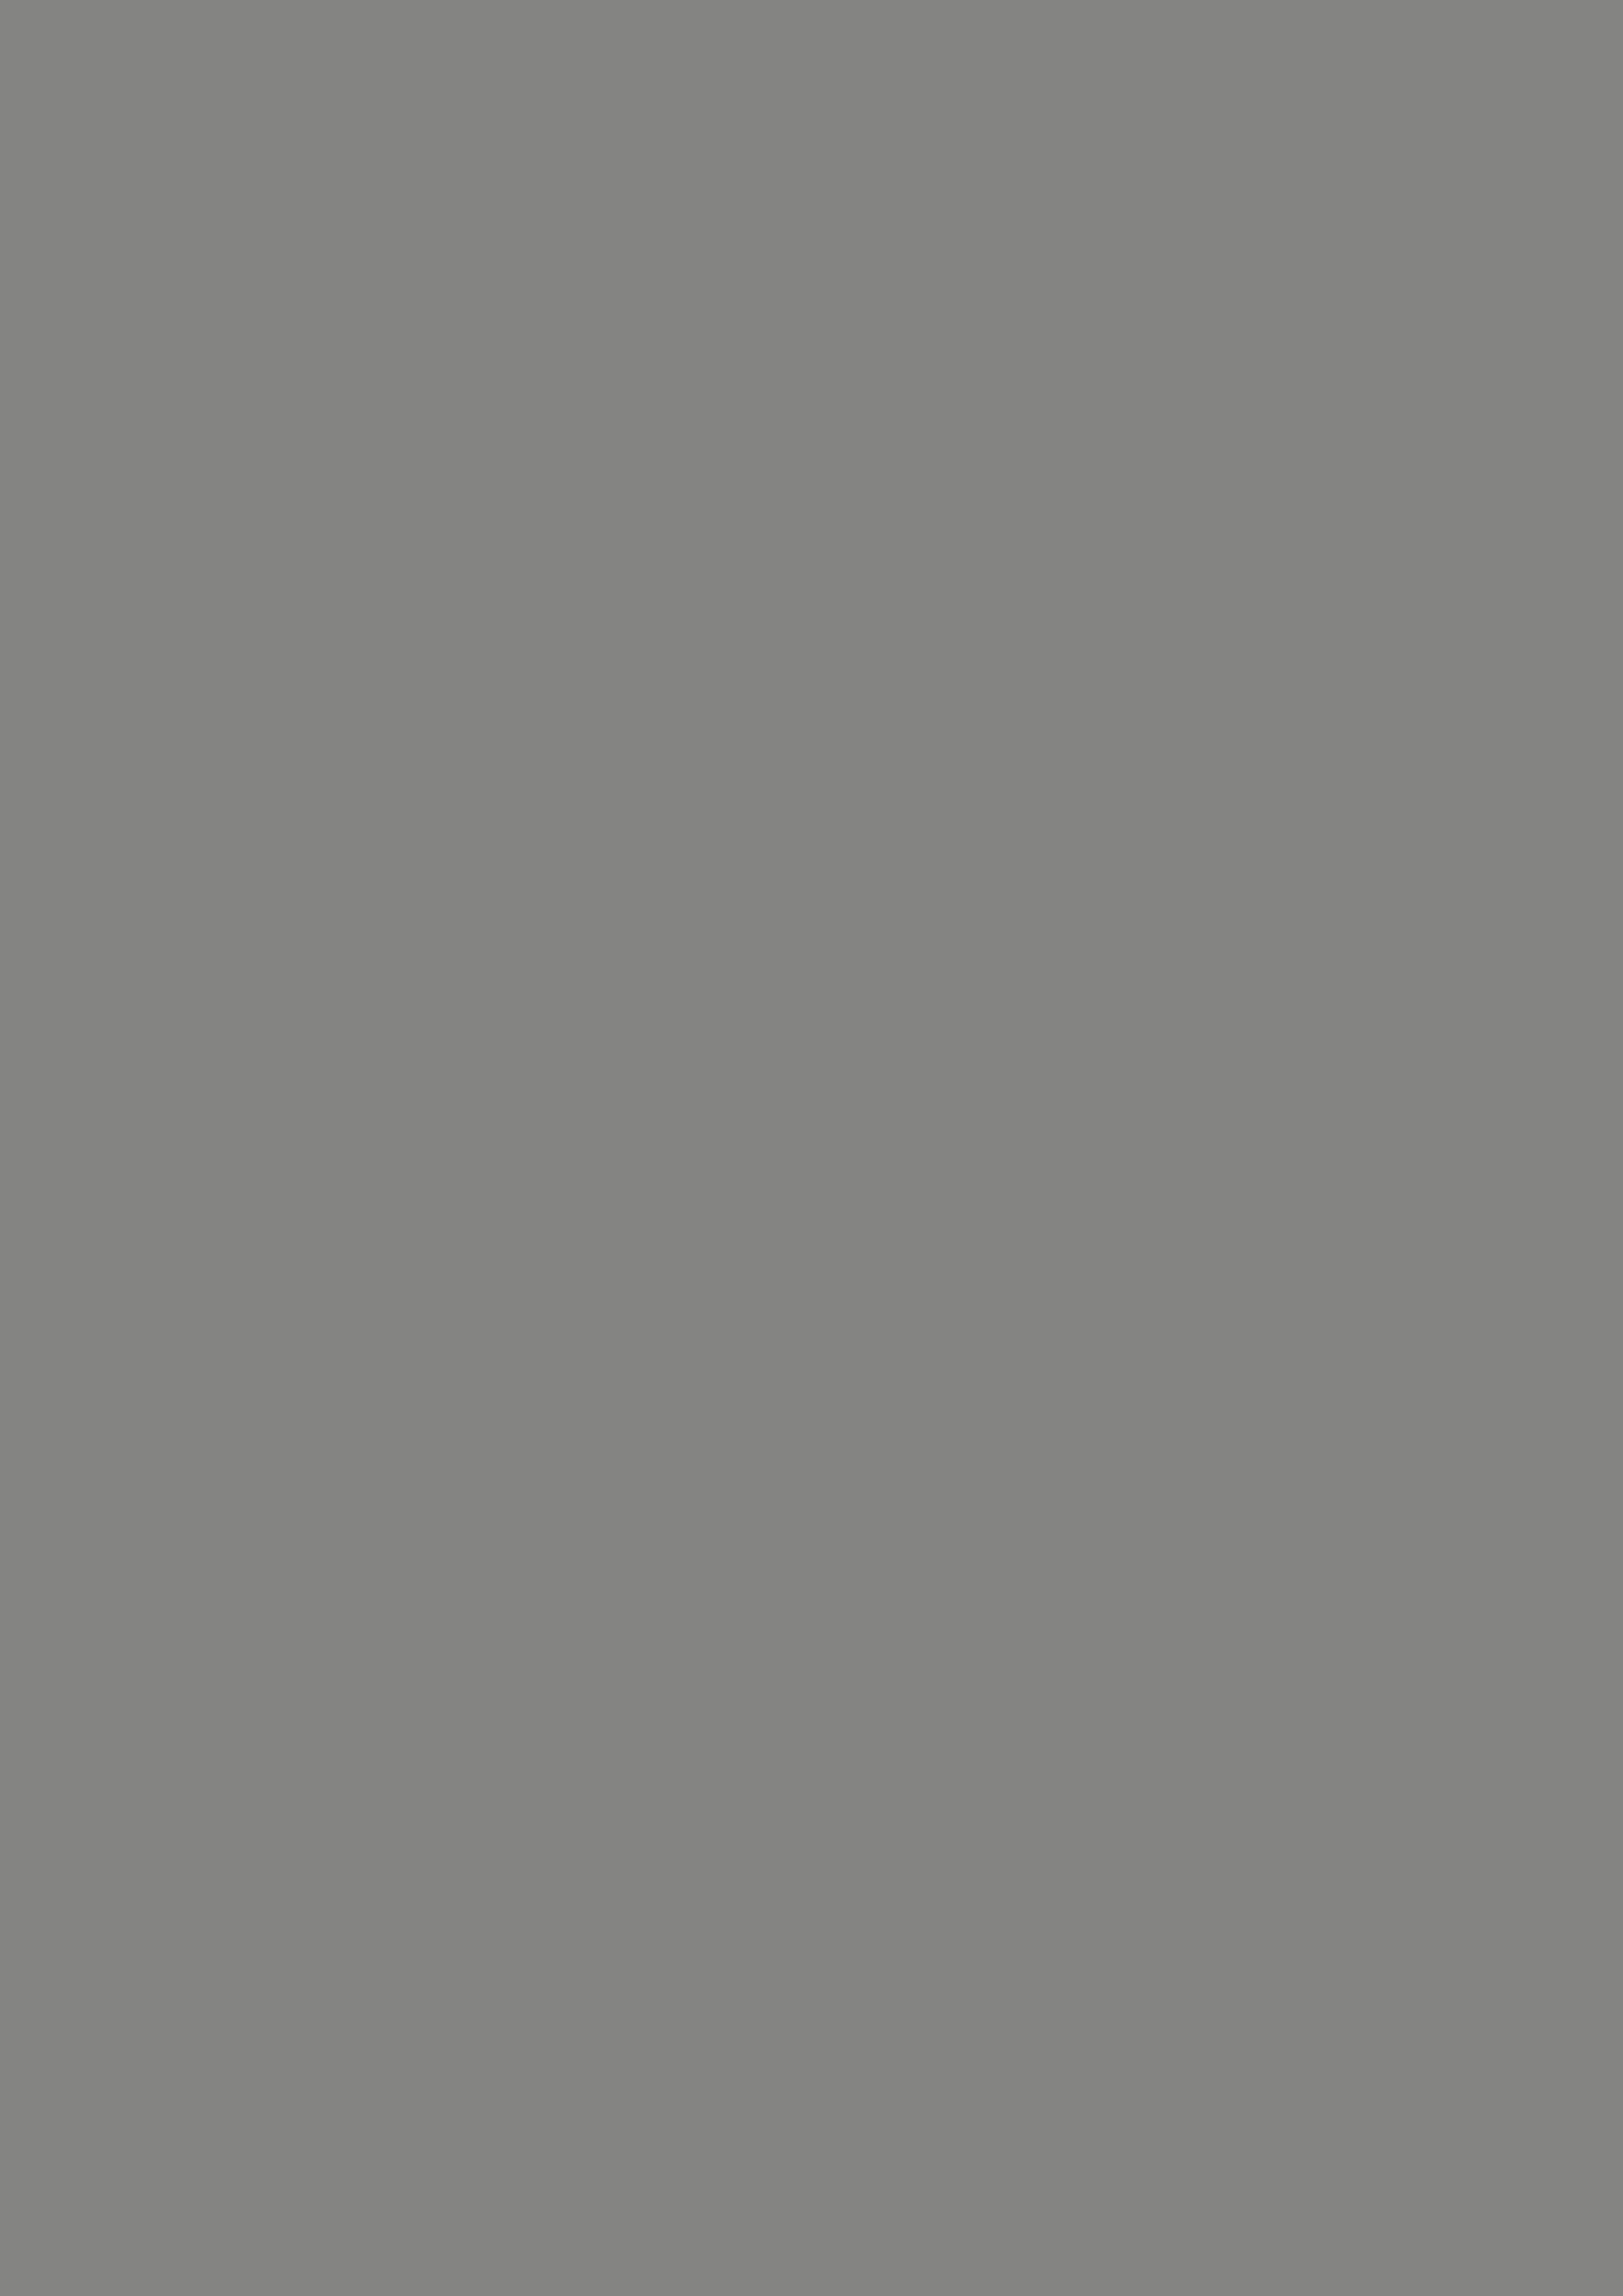 2480x3508 Battleship Grey Solid Color Background